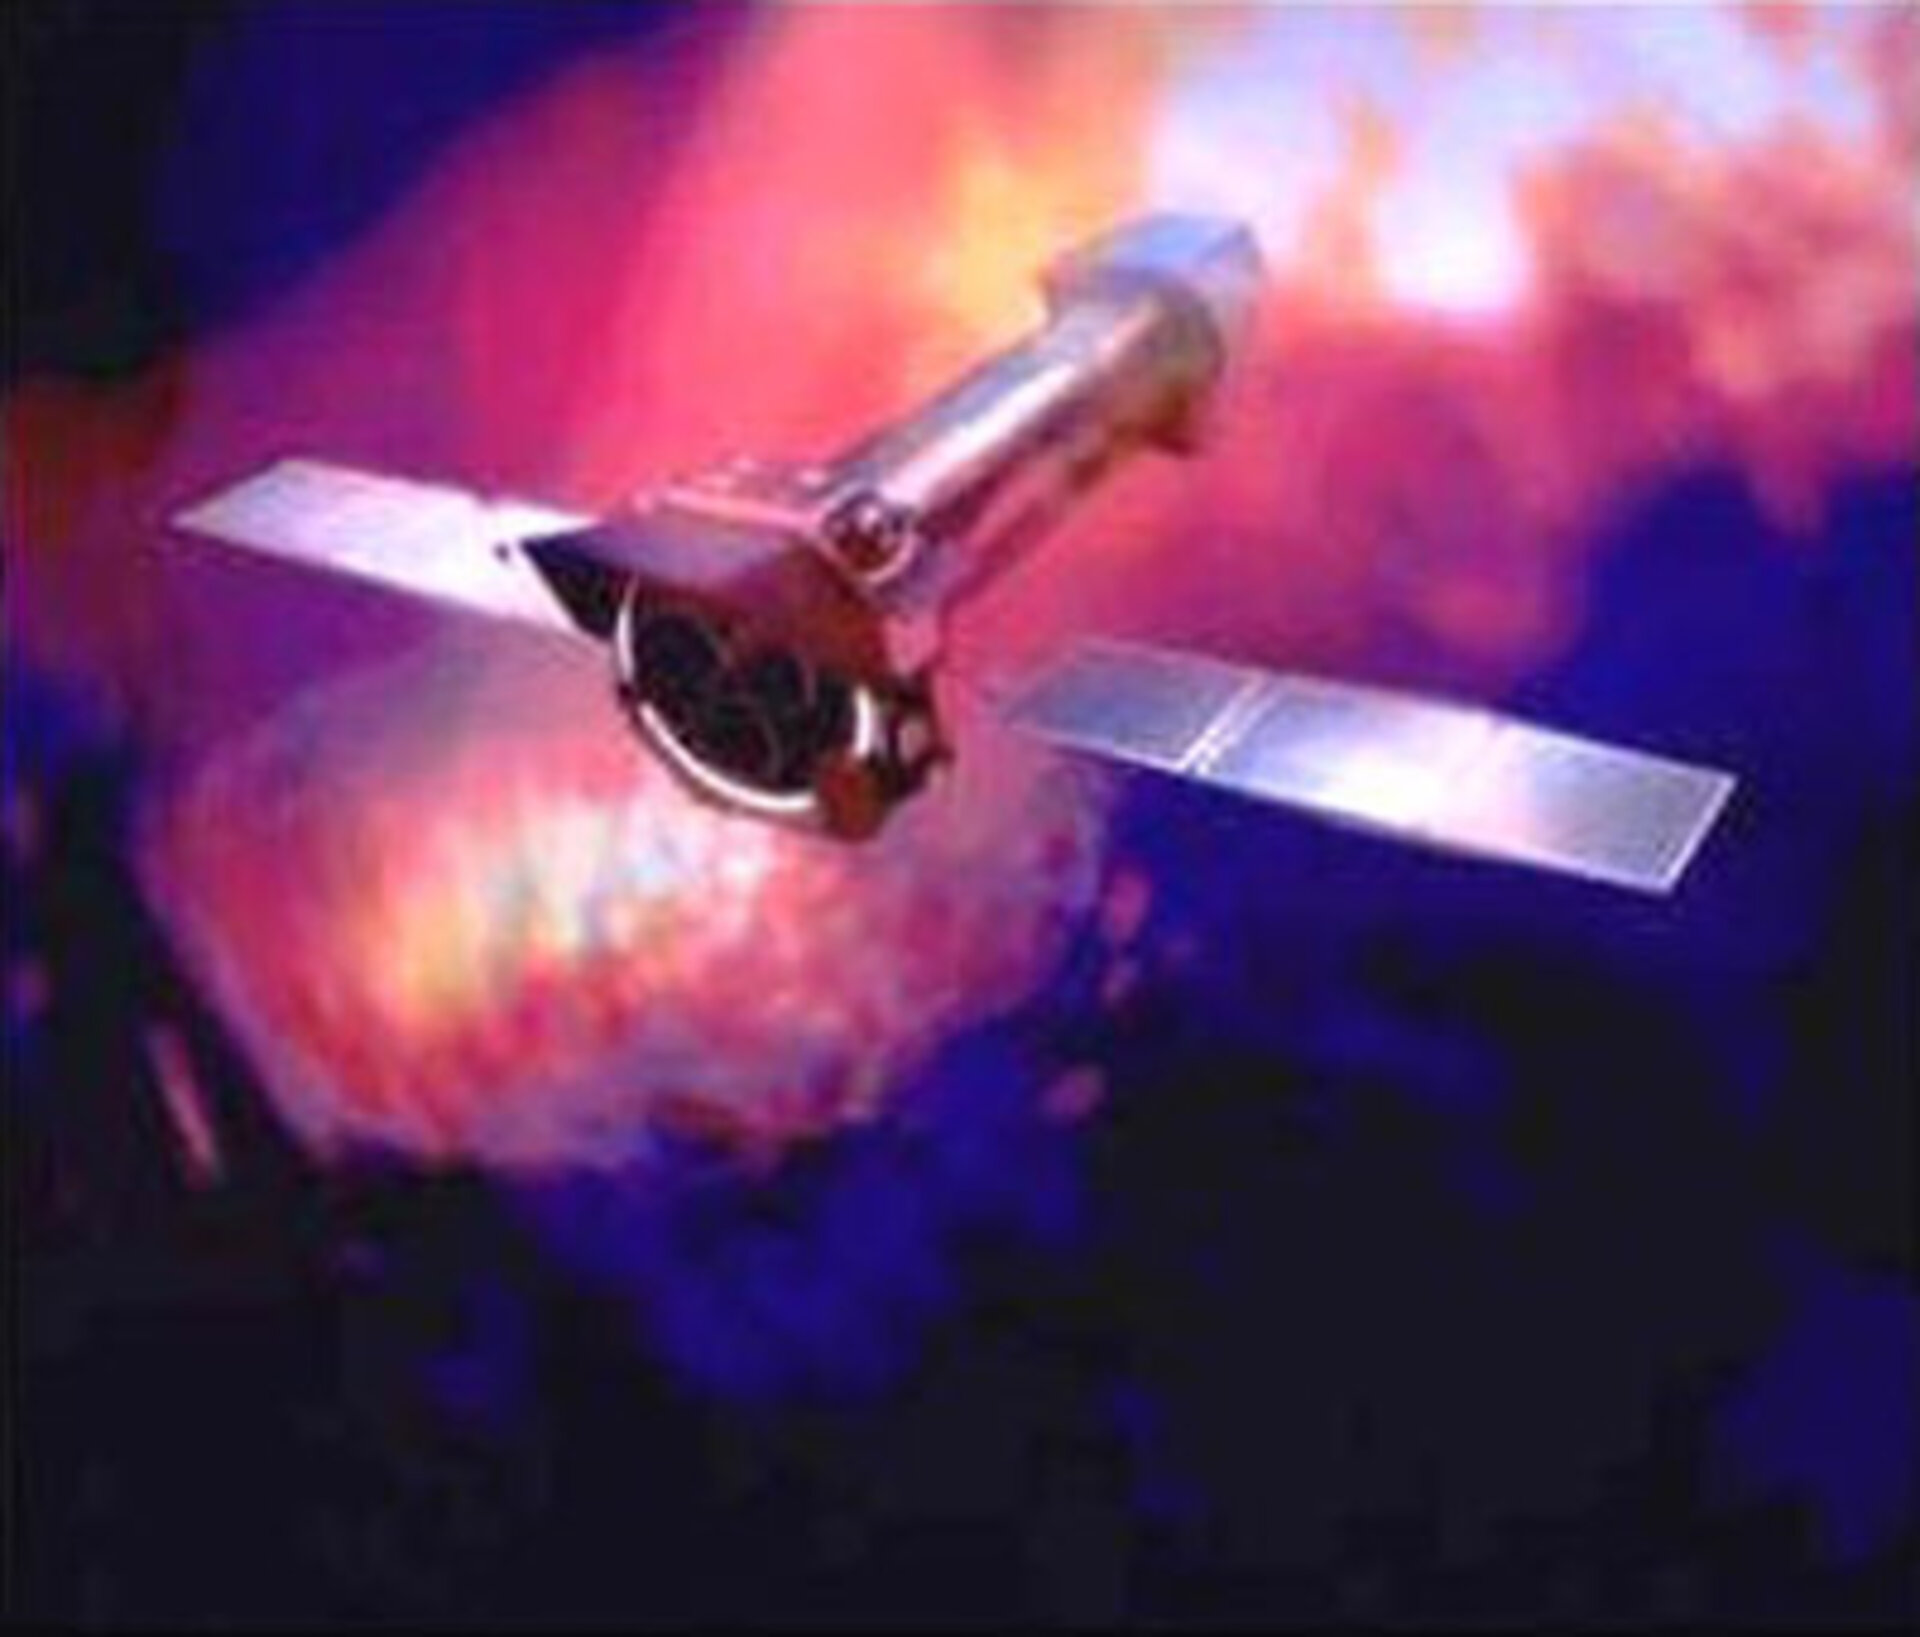 XMM-Newton, the world's most sensitive X-ray satellite